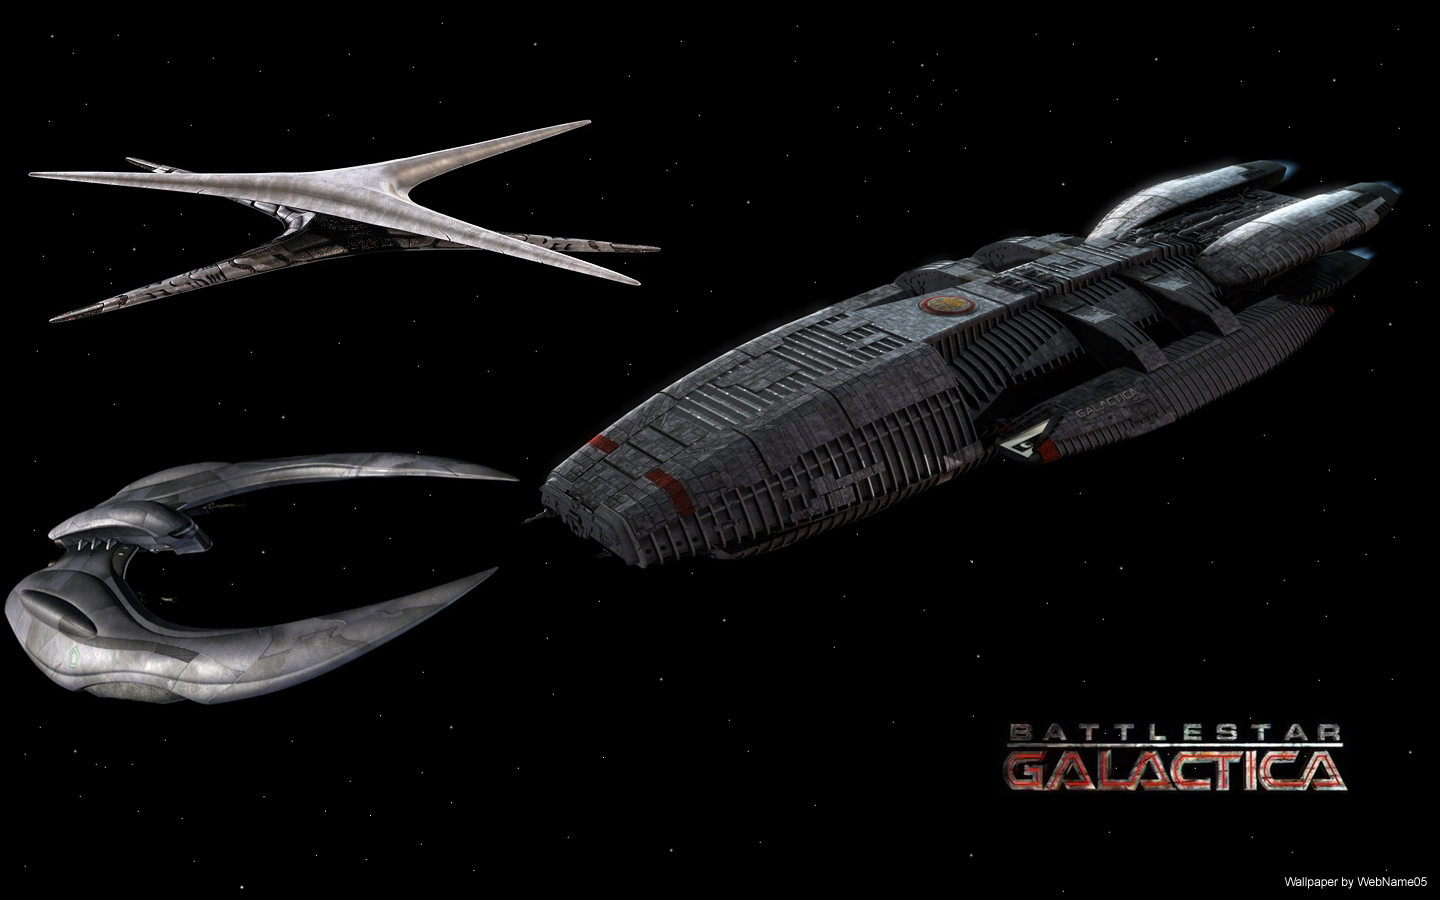 Battlestar Galactica Wallpaper By Webname05